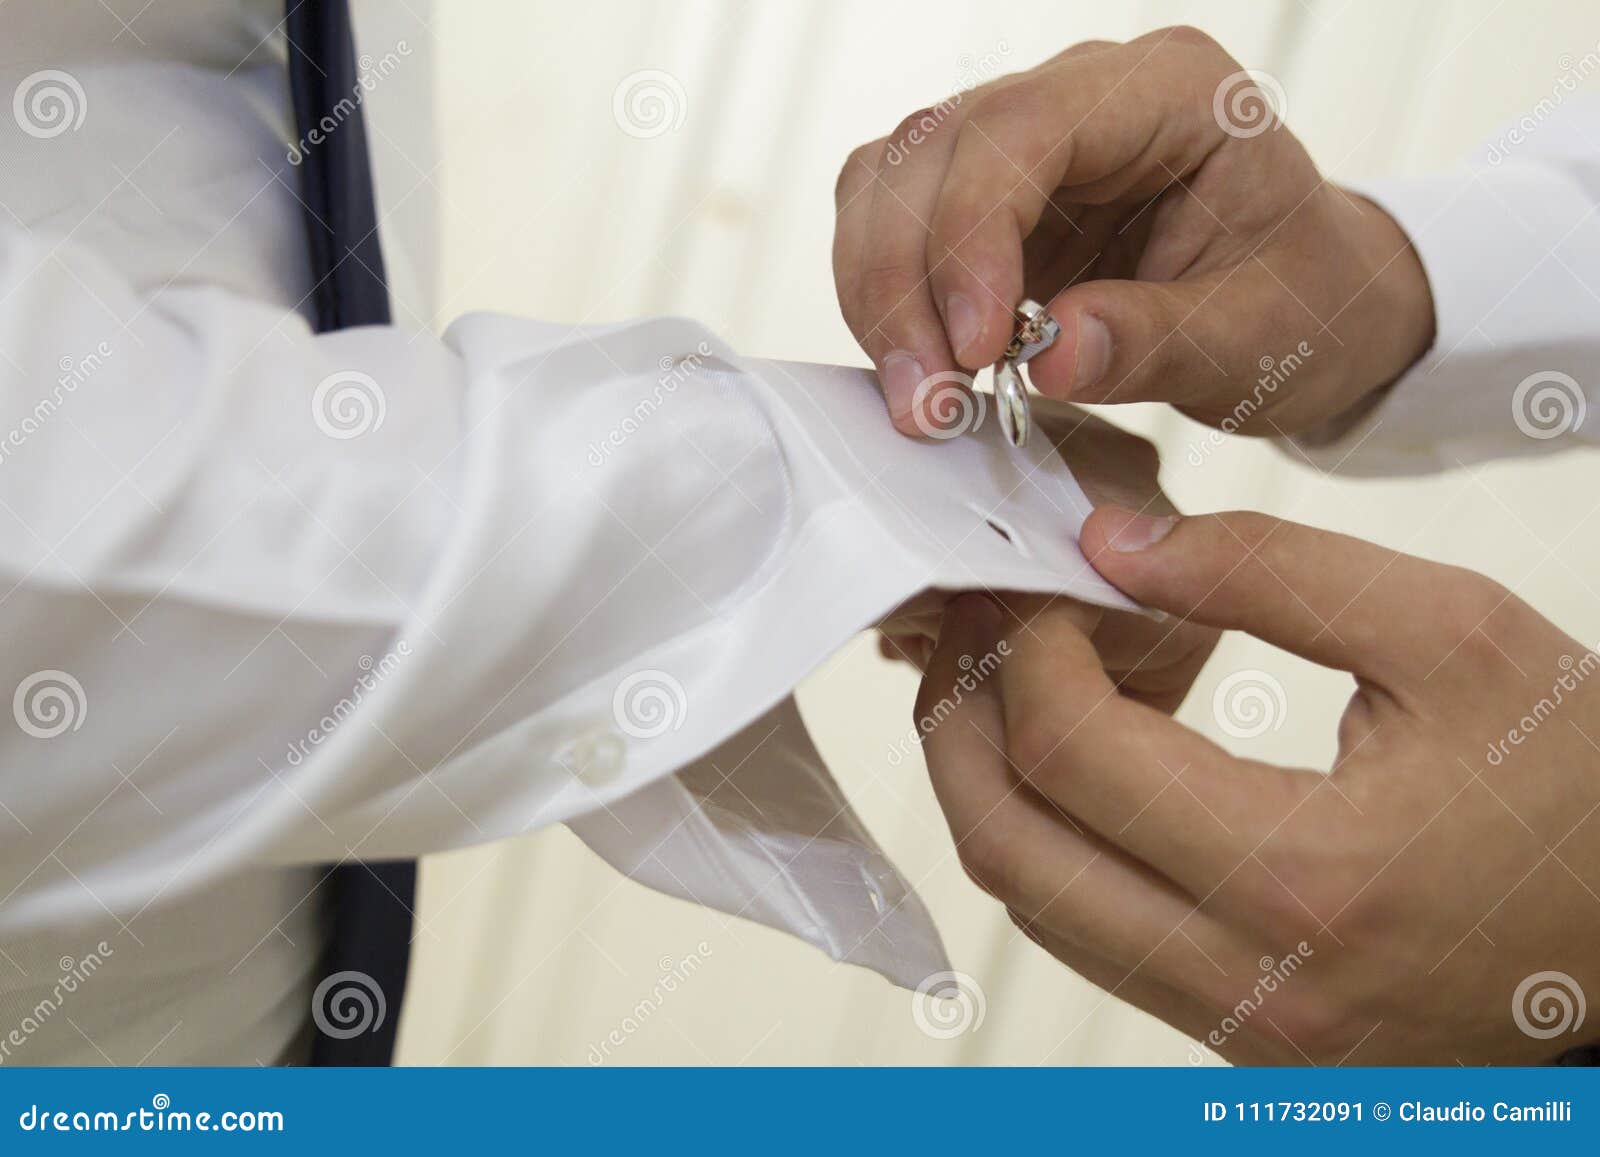 wedding cuffie and hand